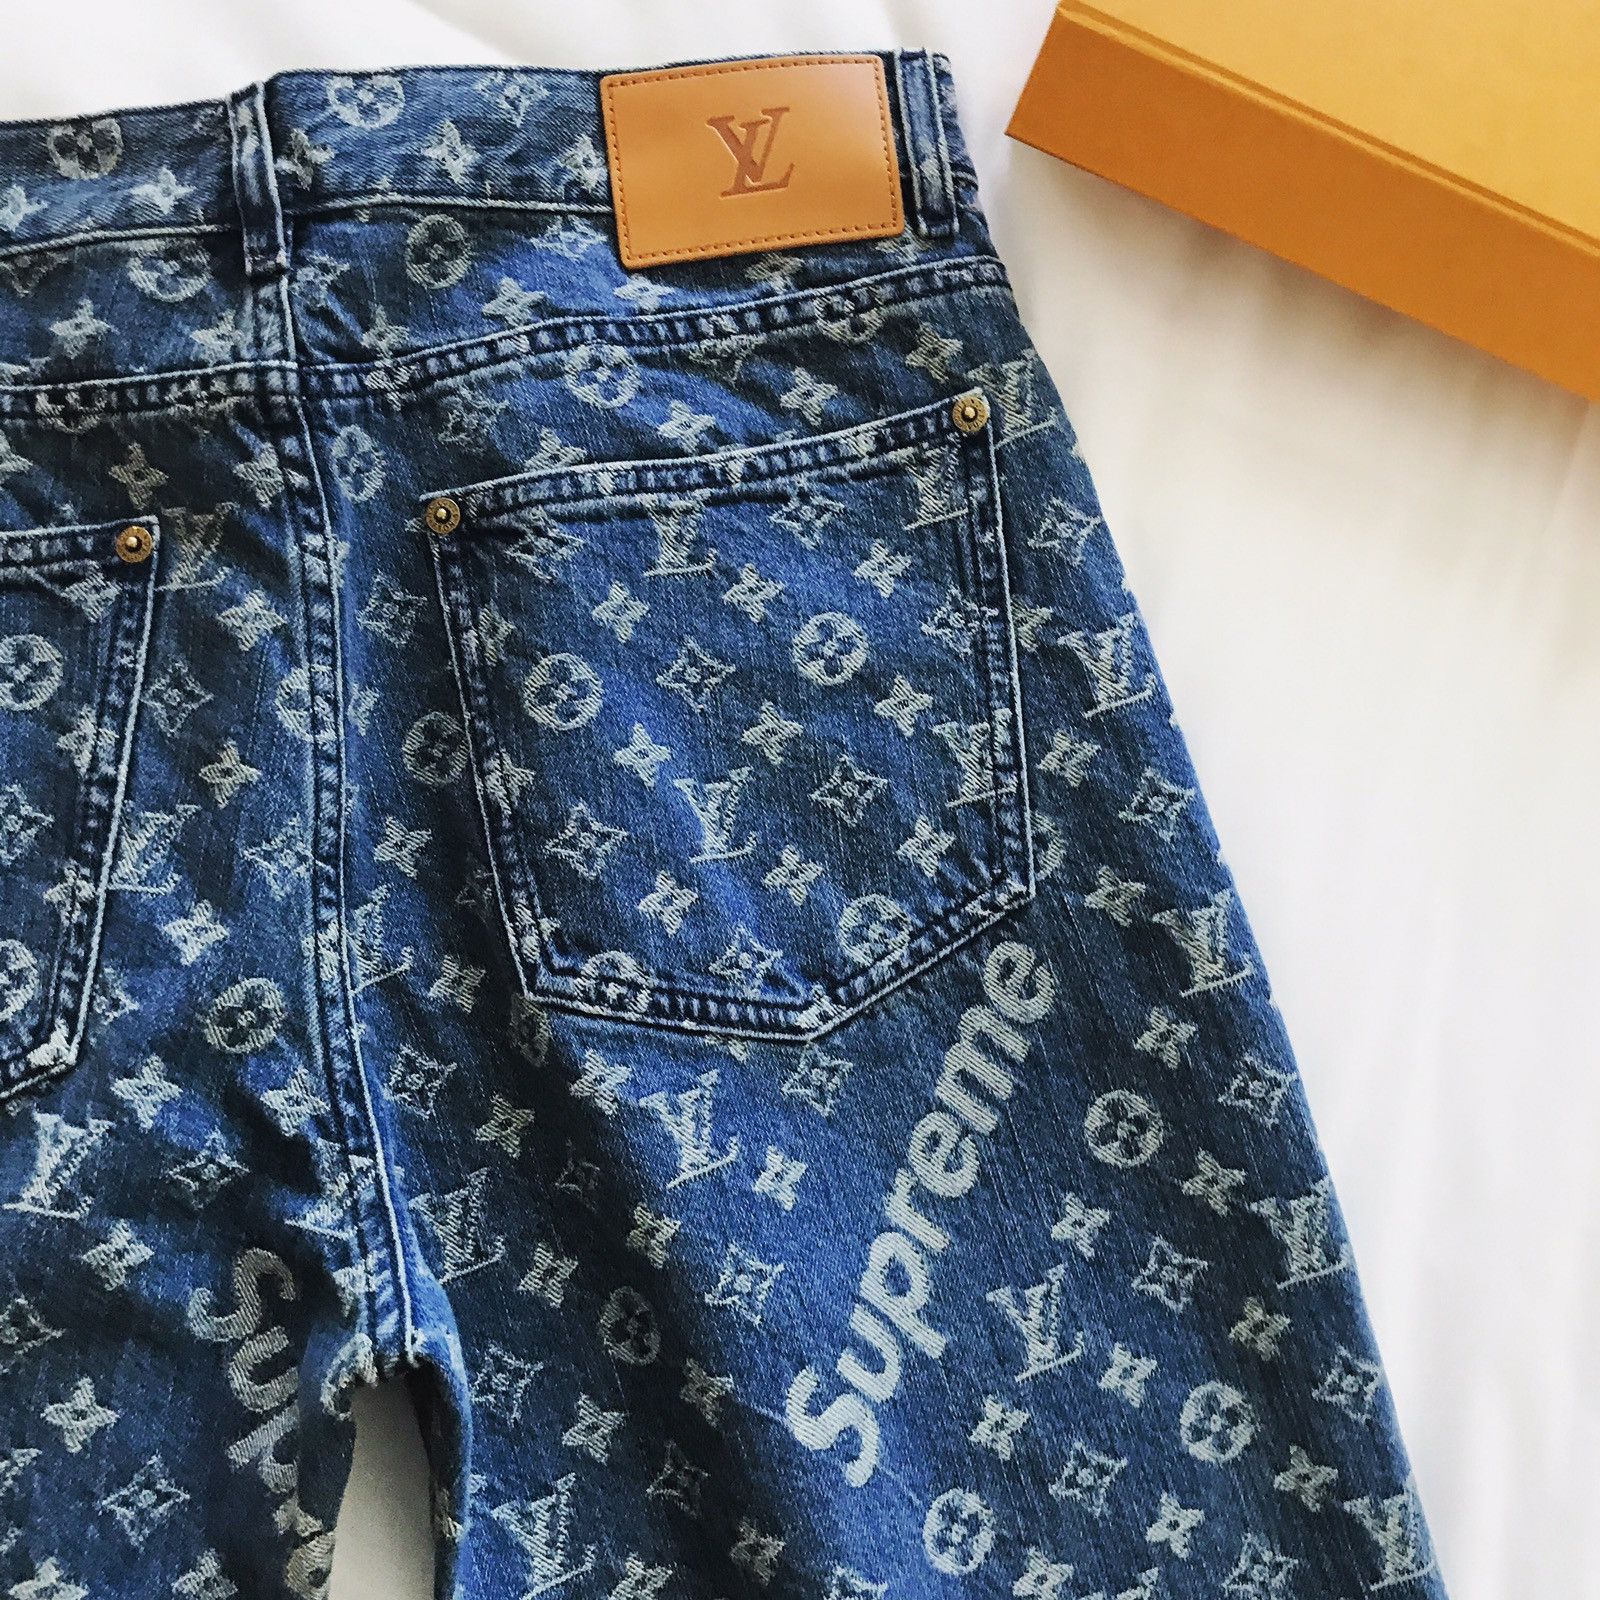 Louis Vuitton Supreme Jeans